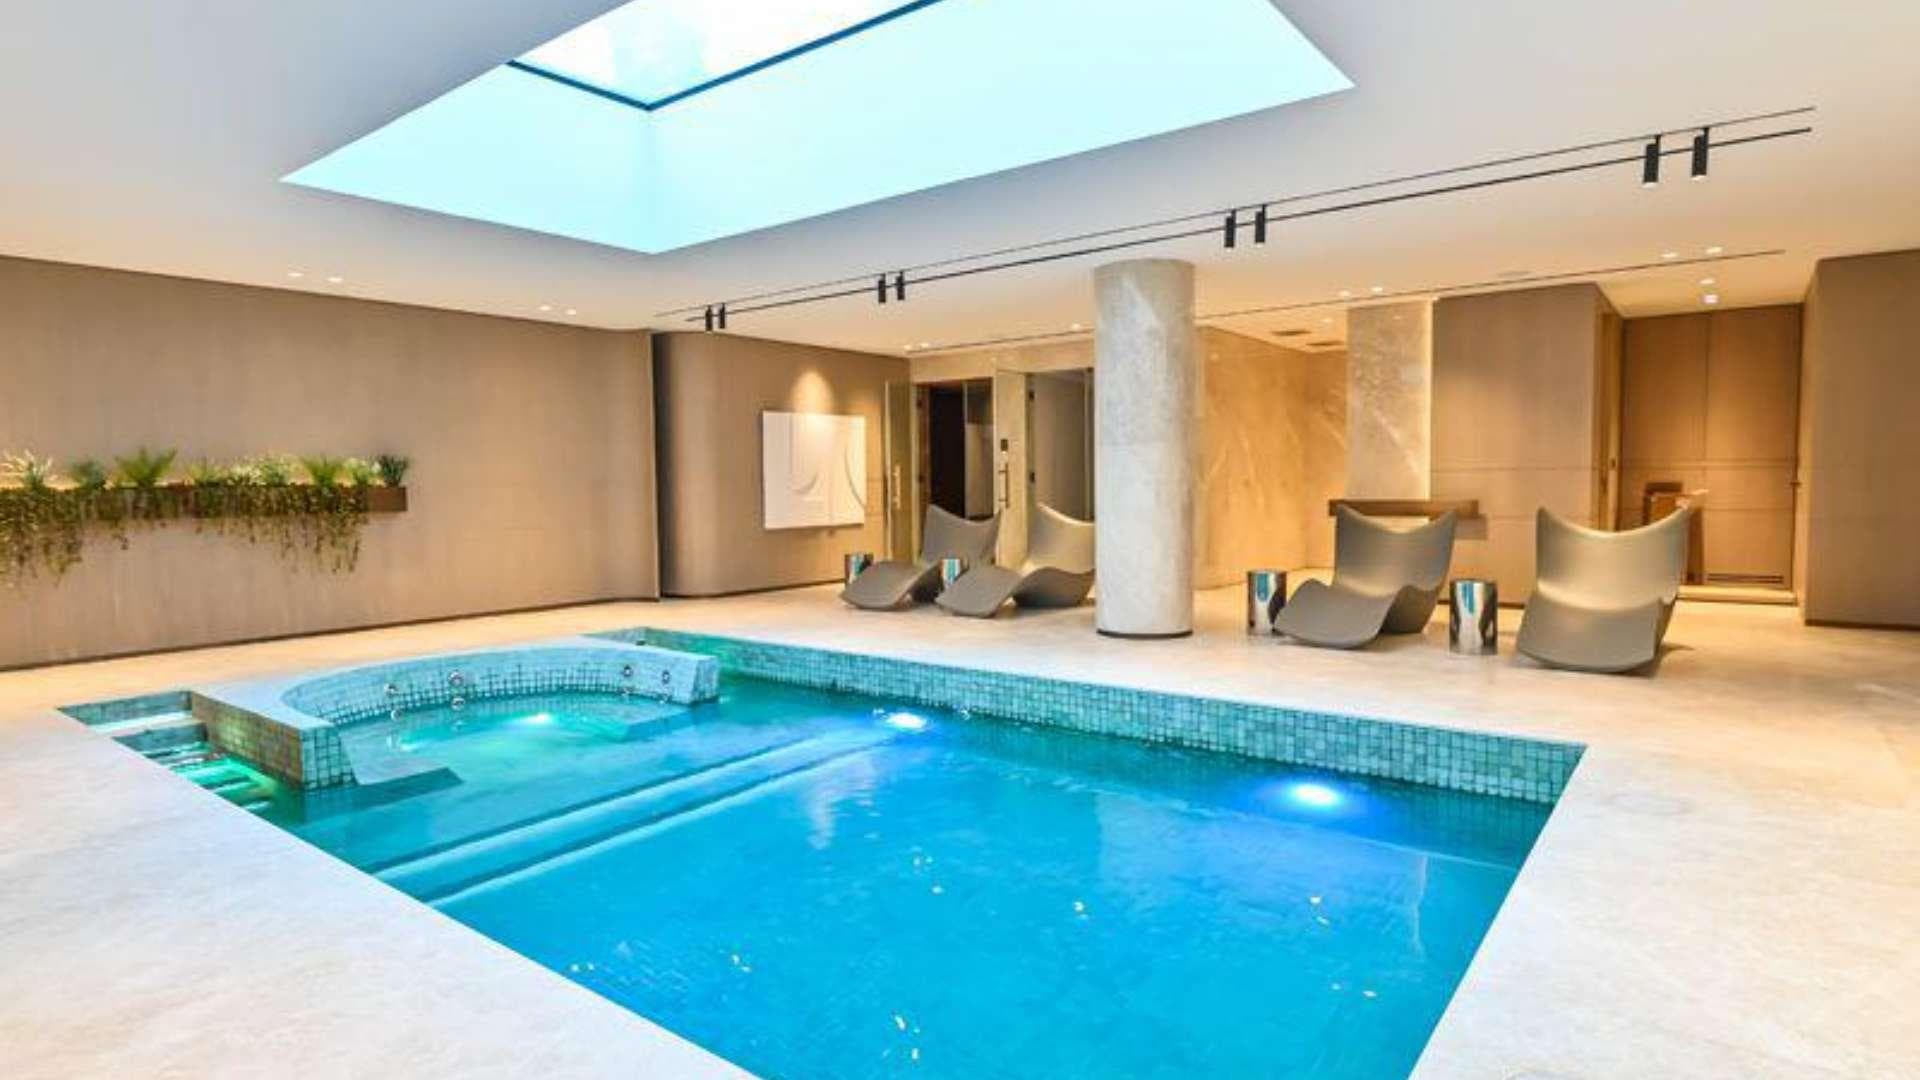 7 Bedroom Villa For Sale Dubai Hills Lp20693 2b13479ebd0ede00.jpg